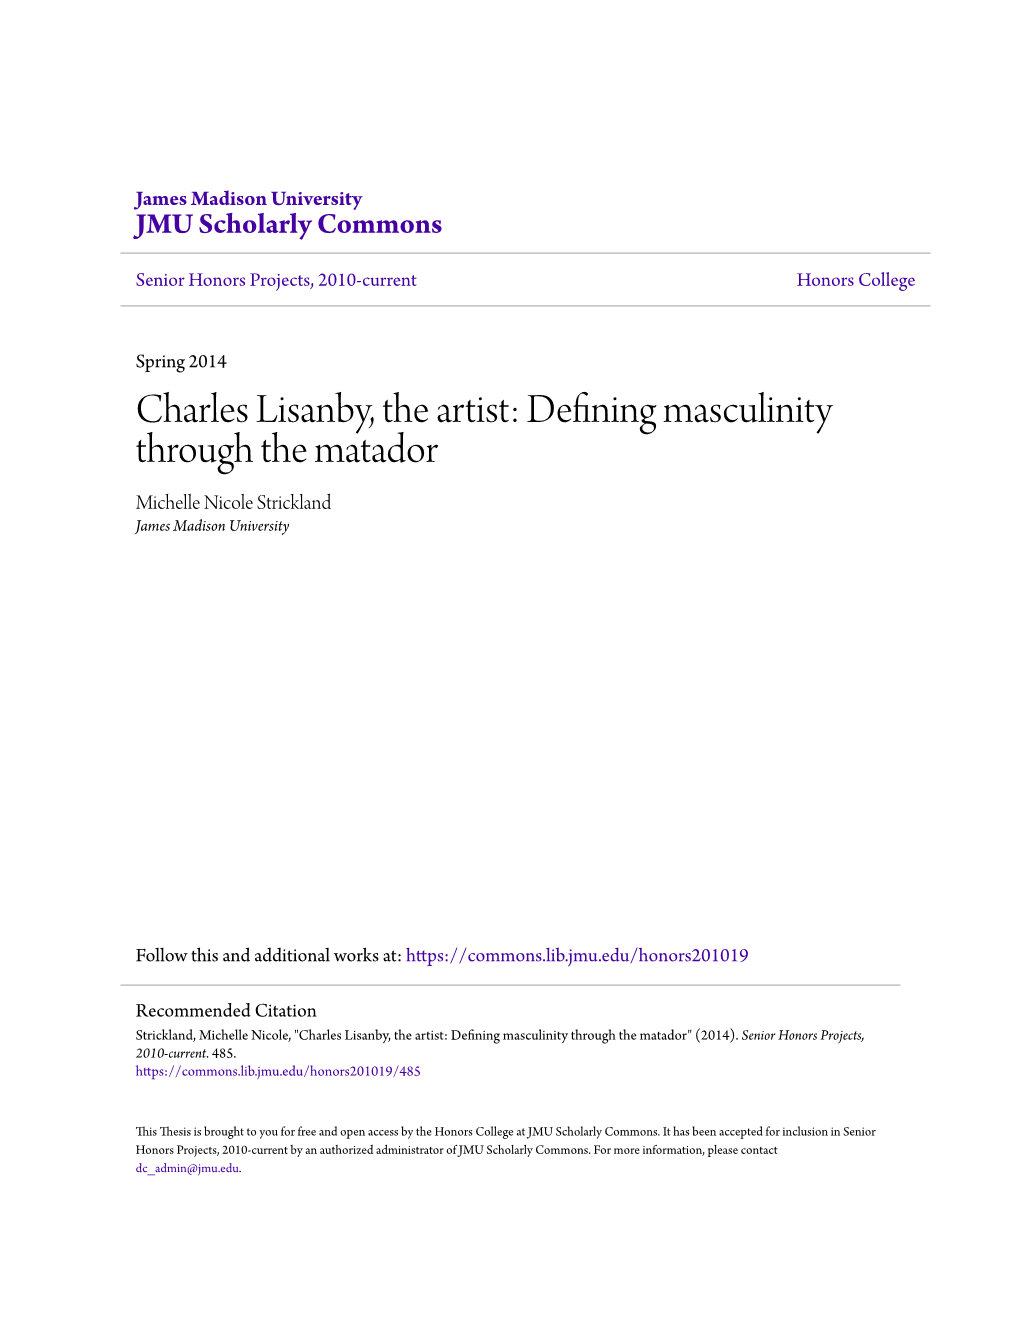 Defining Masculinity Through the Matador Michelle Nicole Strickland James Madison University